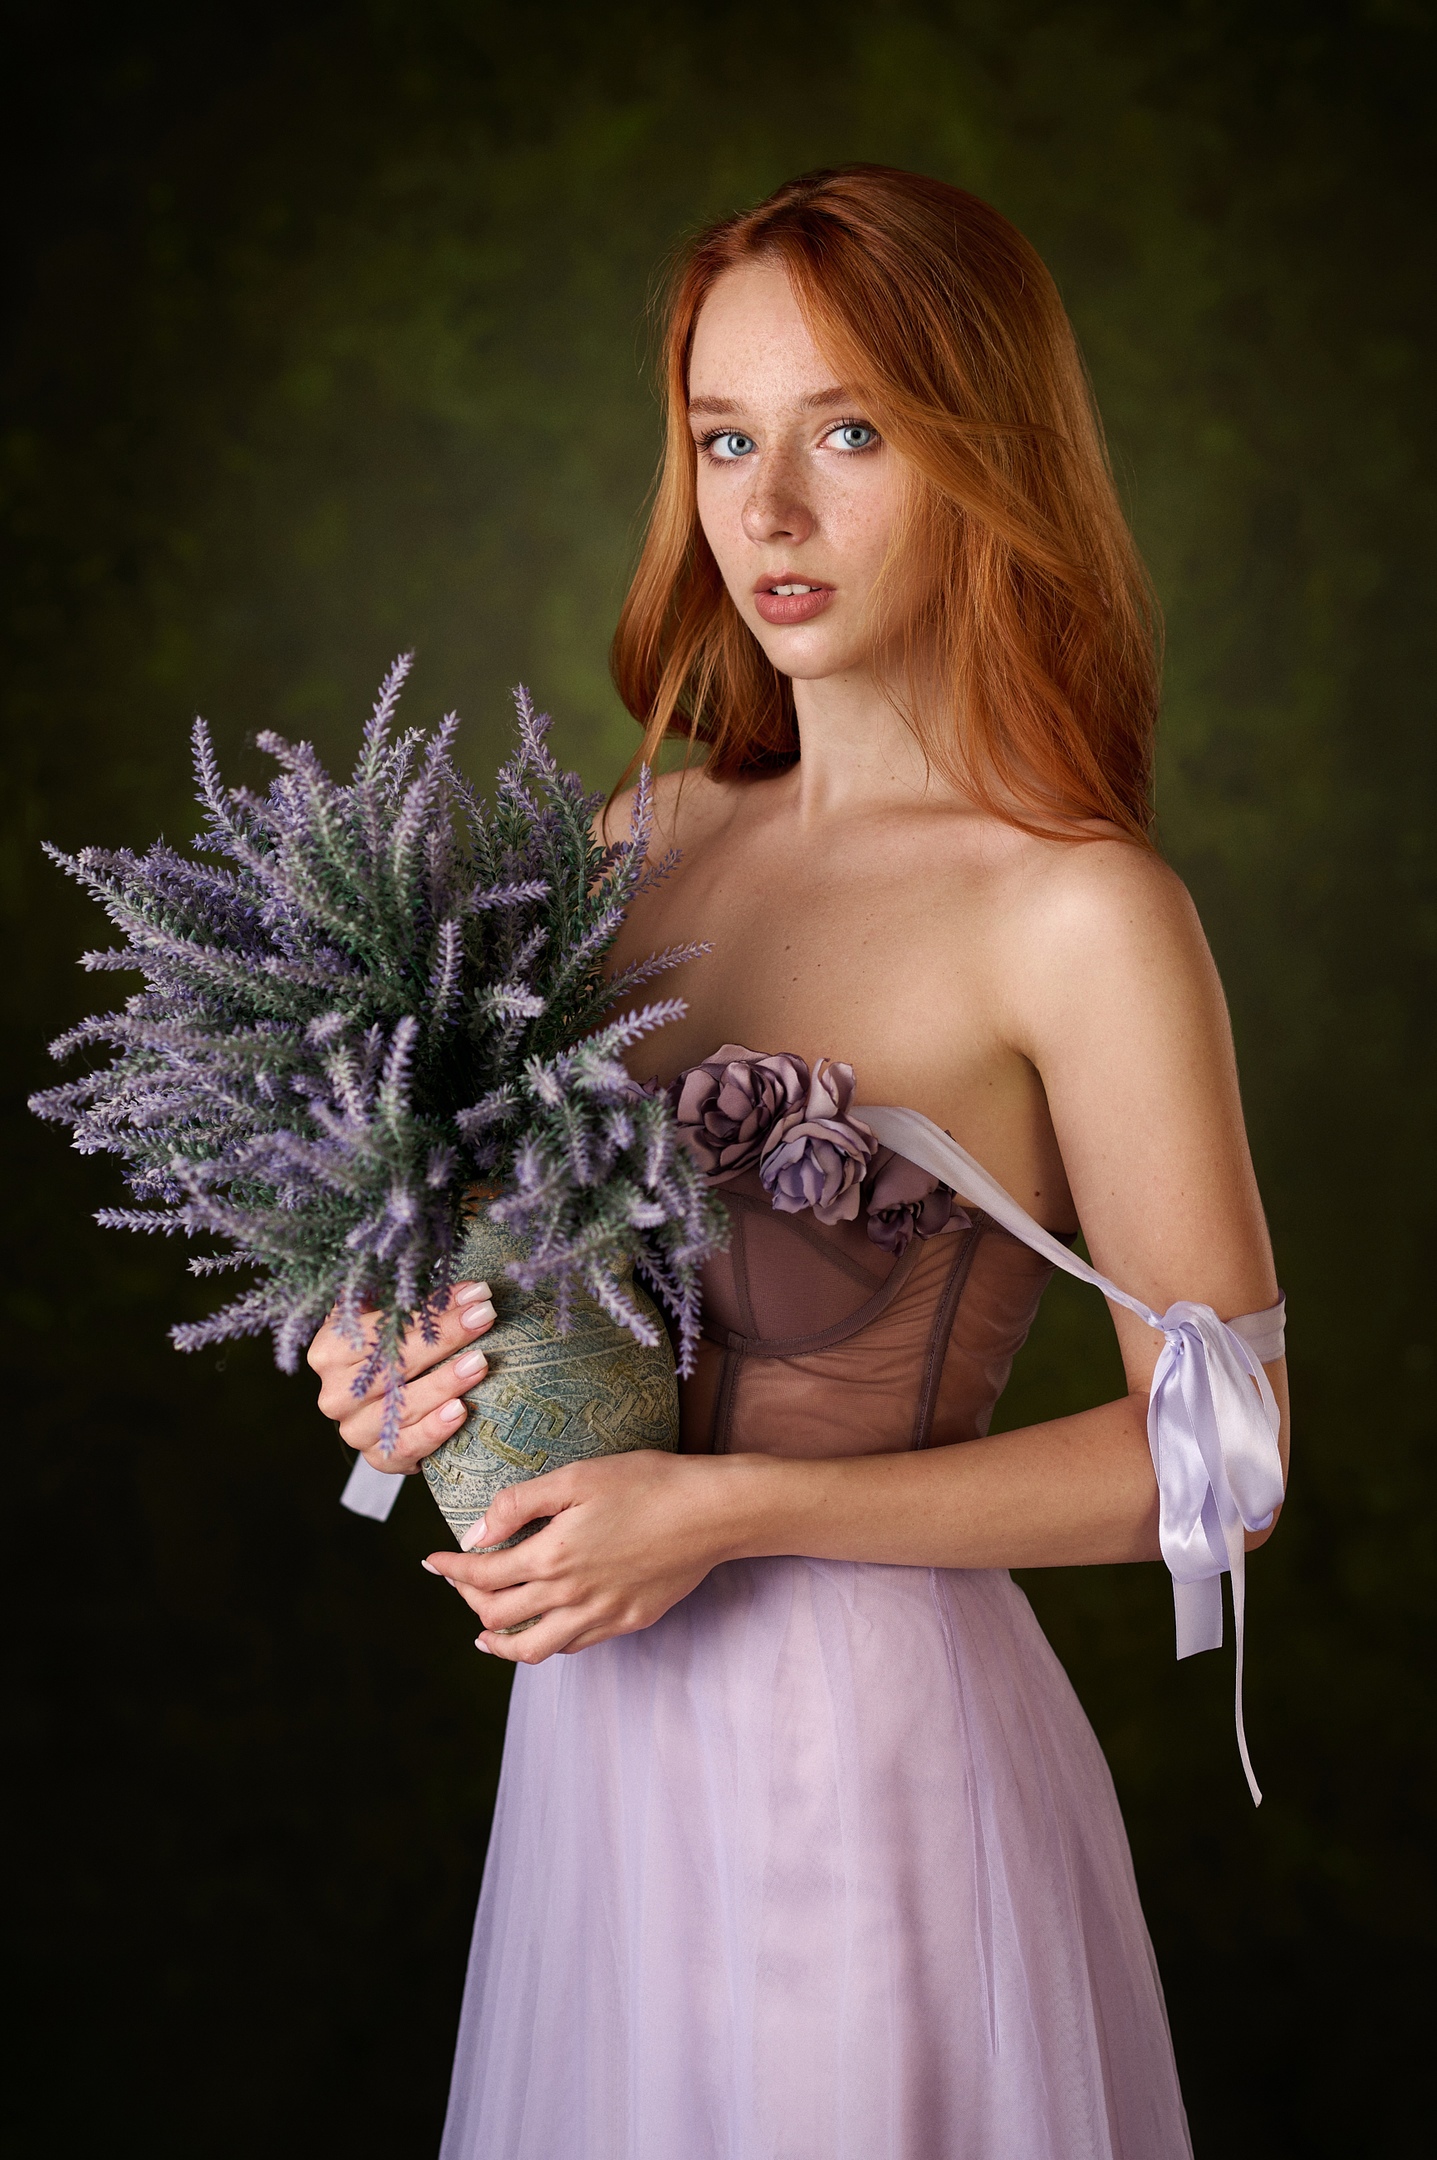 Max Pyzhik Women Redhead Dress Bare Shoulders Flowers Simple Background Studio Model 1437x2160